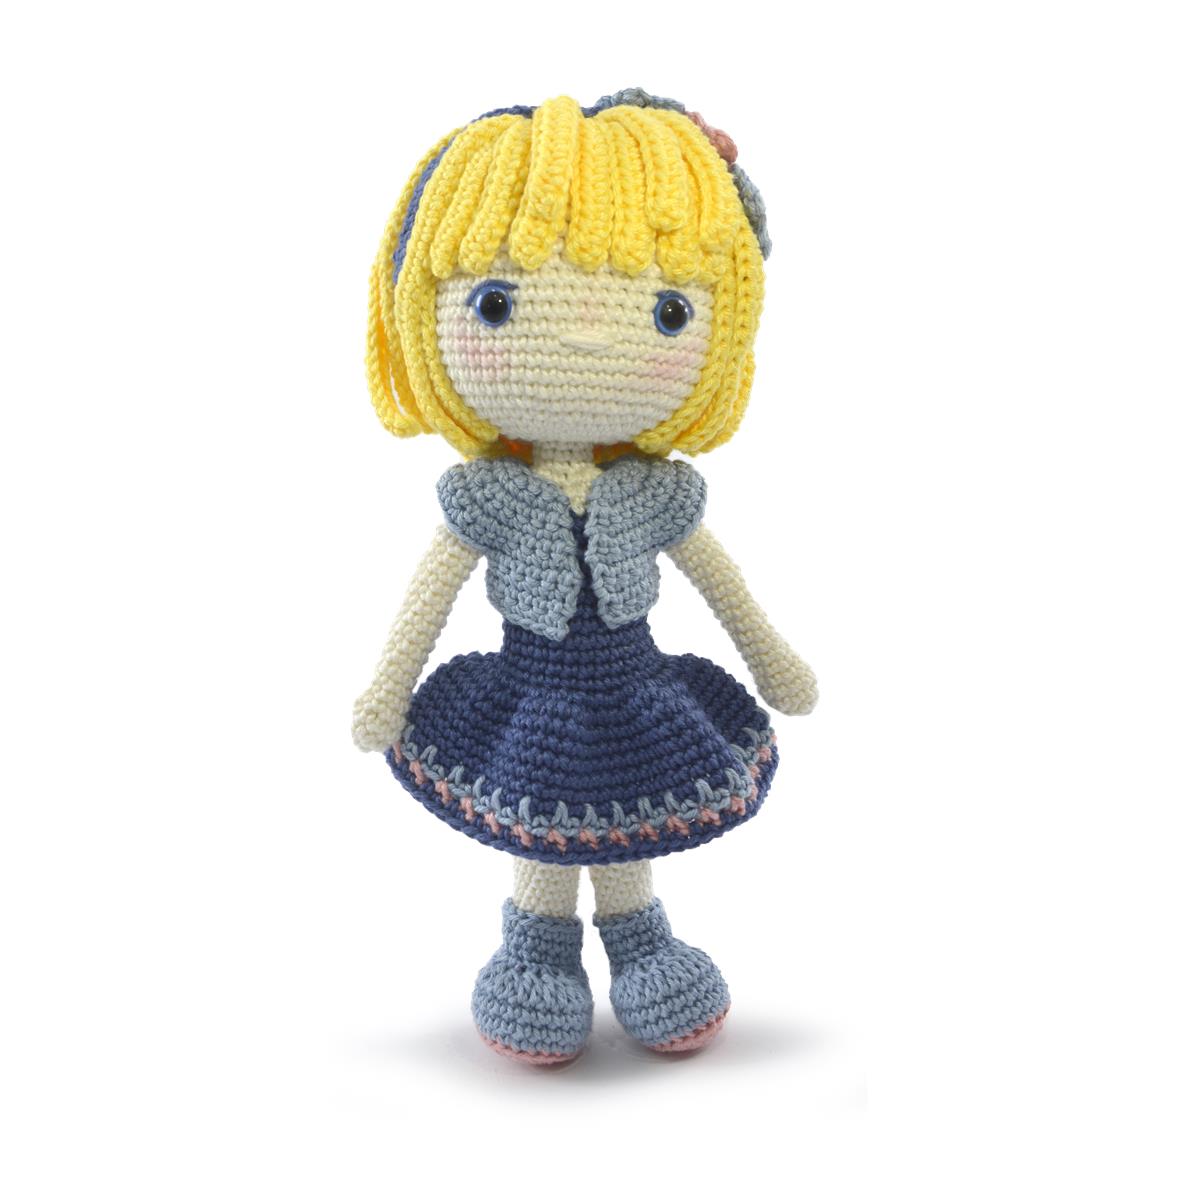 Circulo Amigurumi Doll Kits